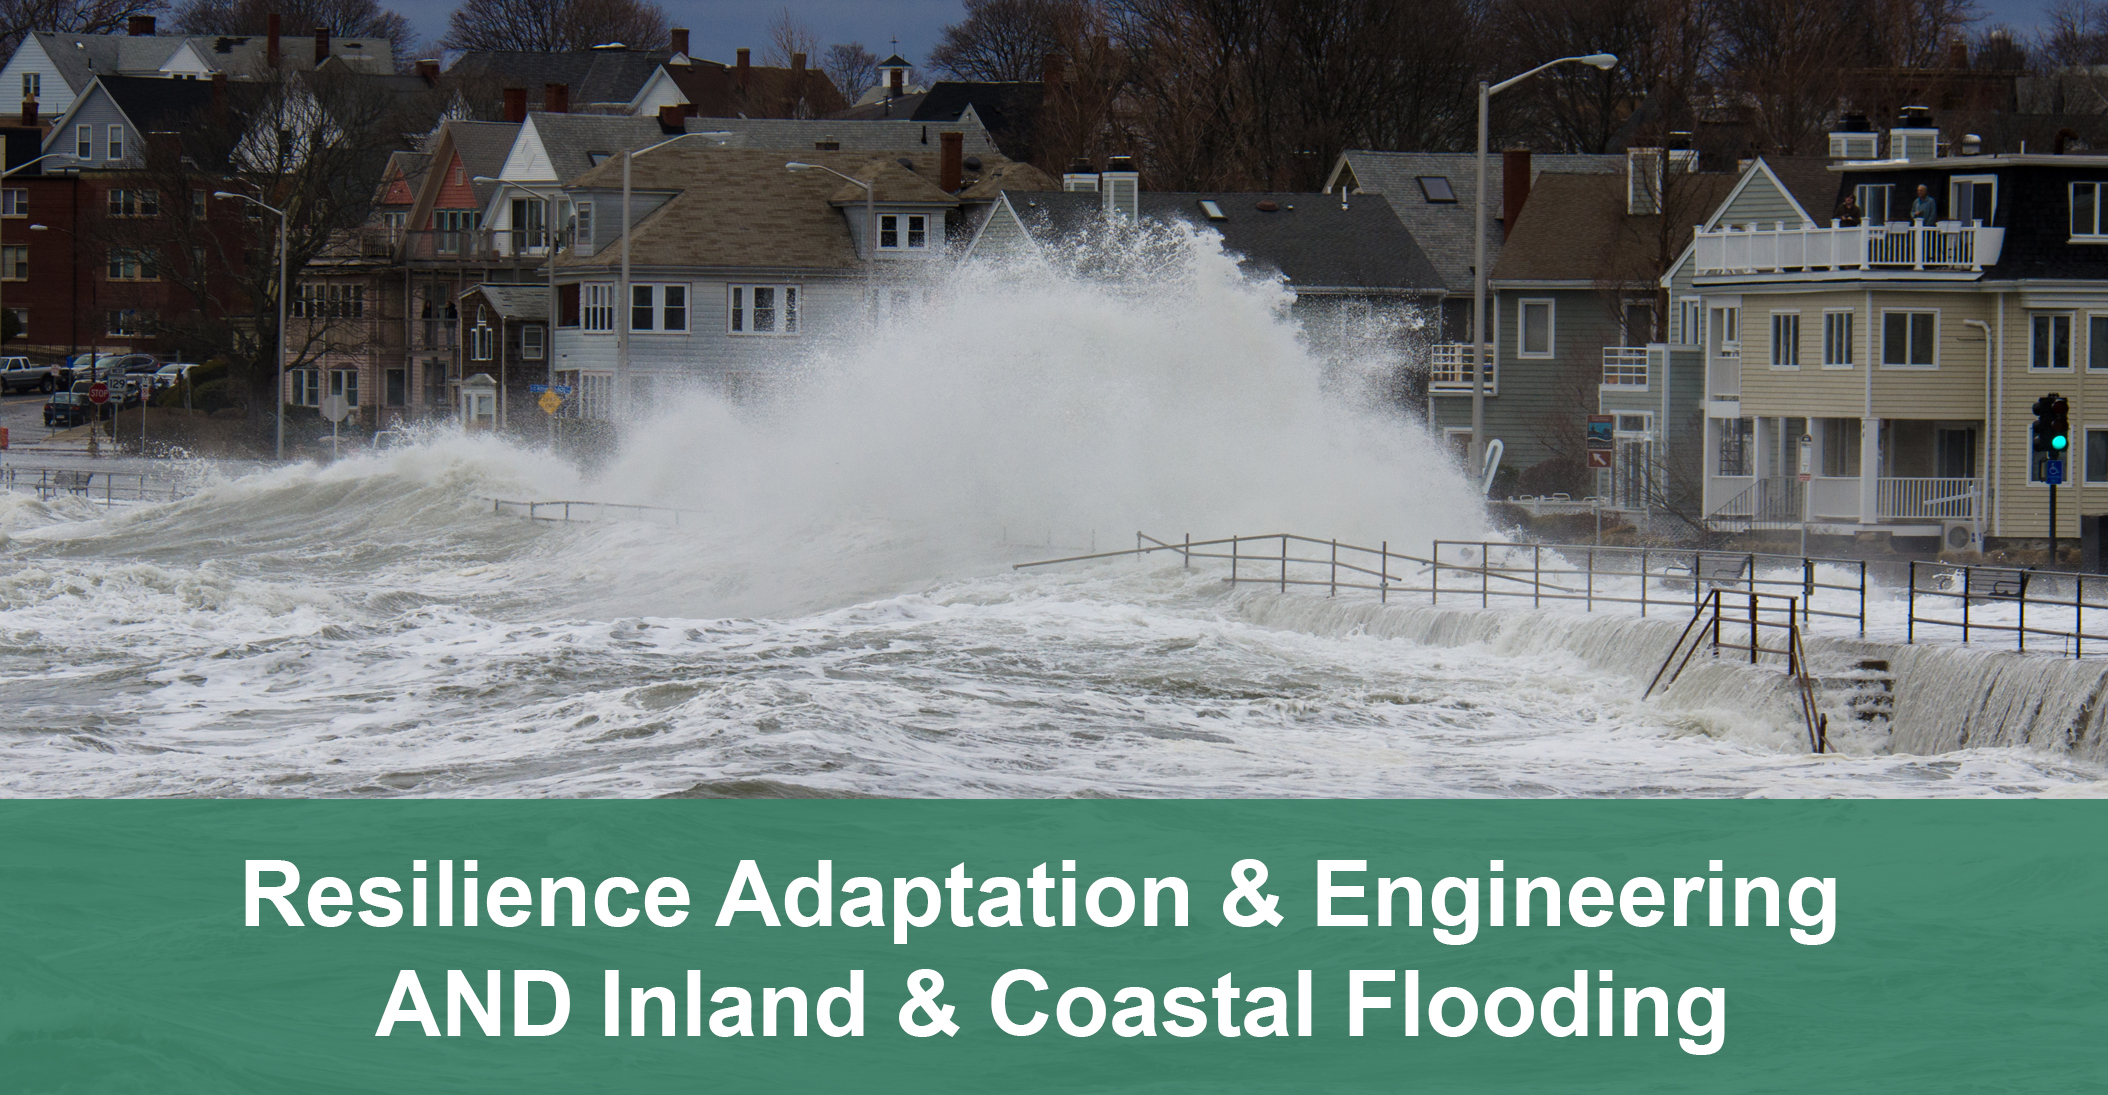 Resilience Adaptation & Engineering AND Inland & Coastal Flooding